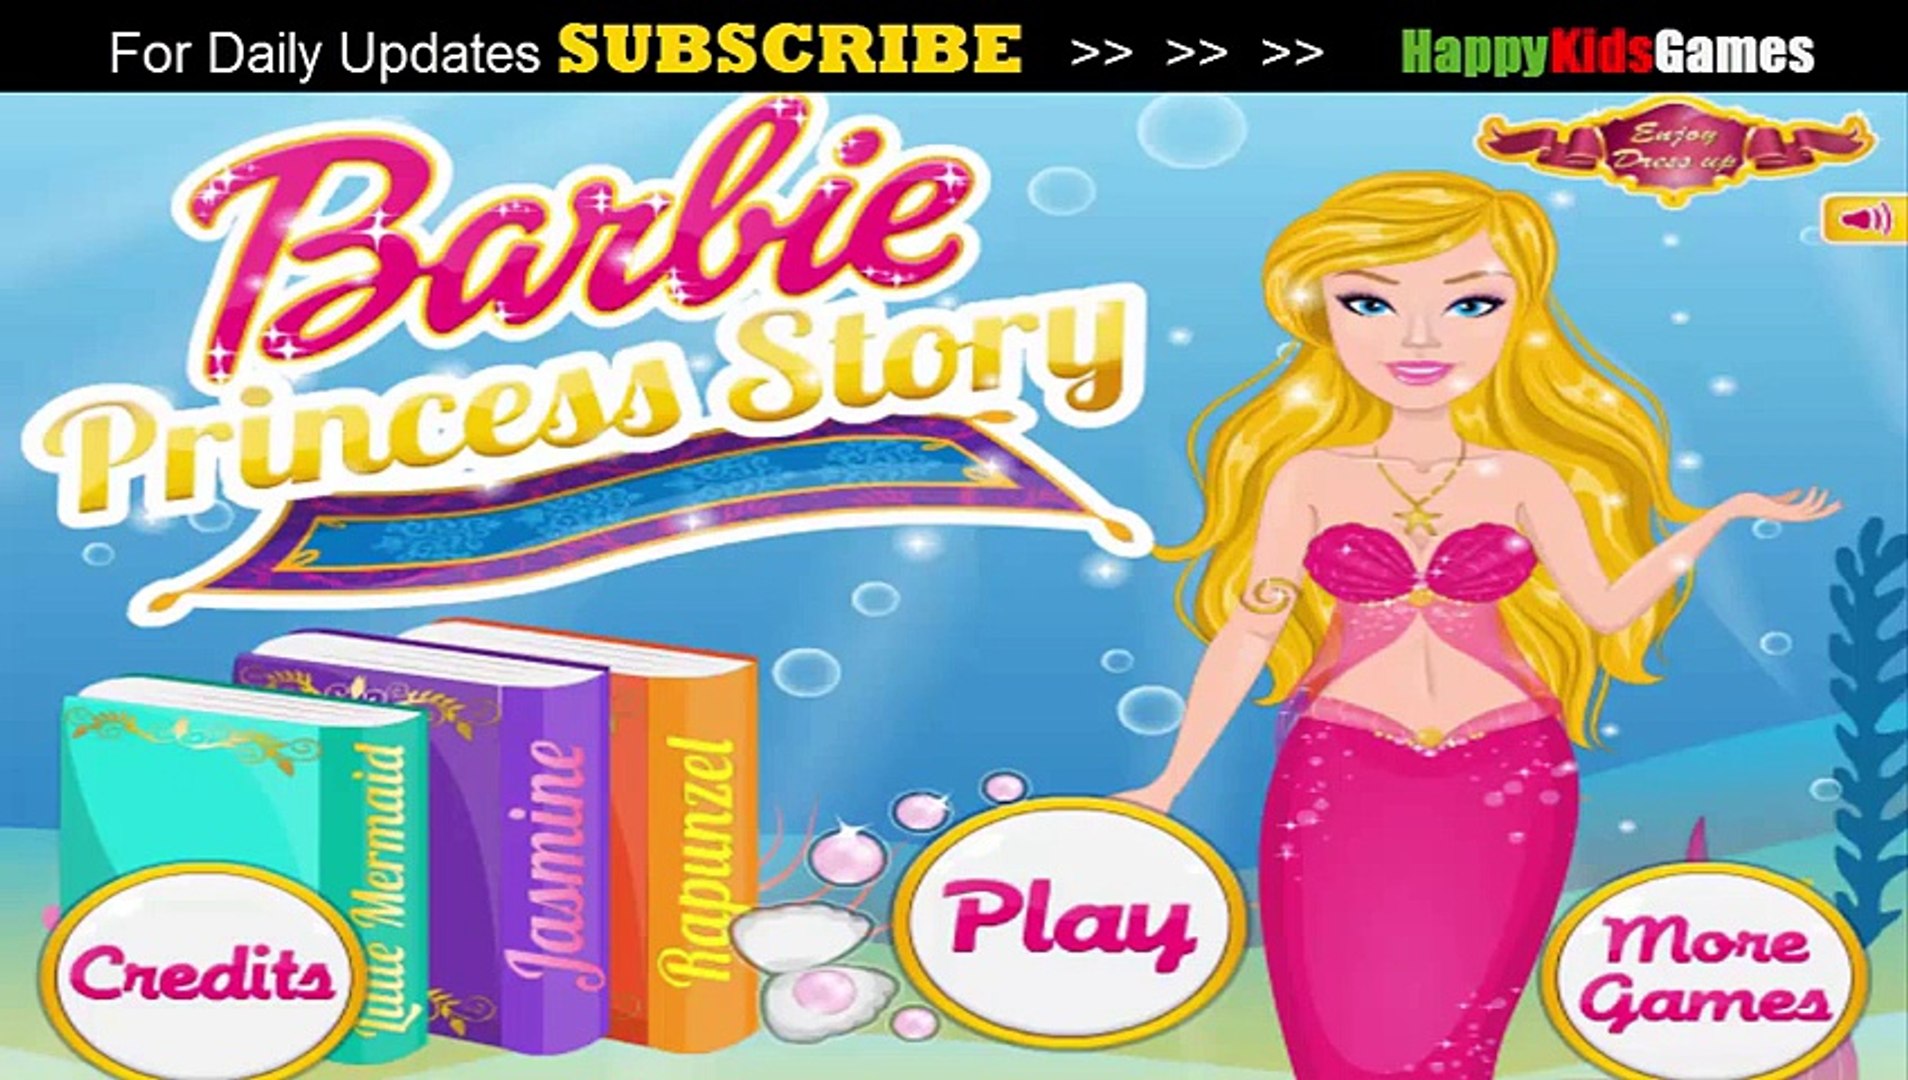 barbie games story